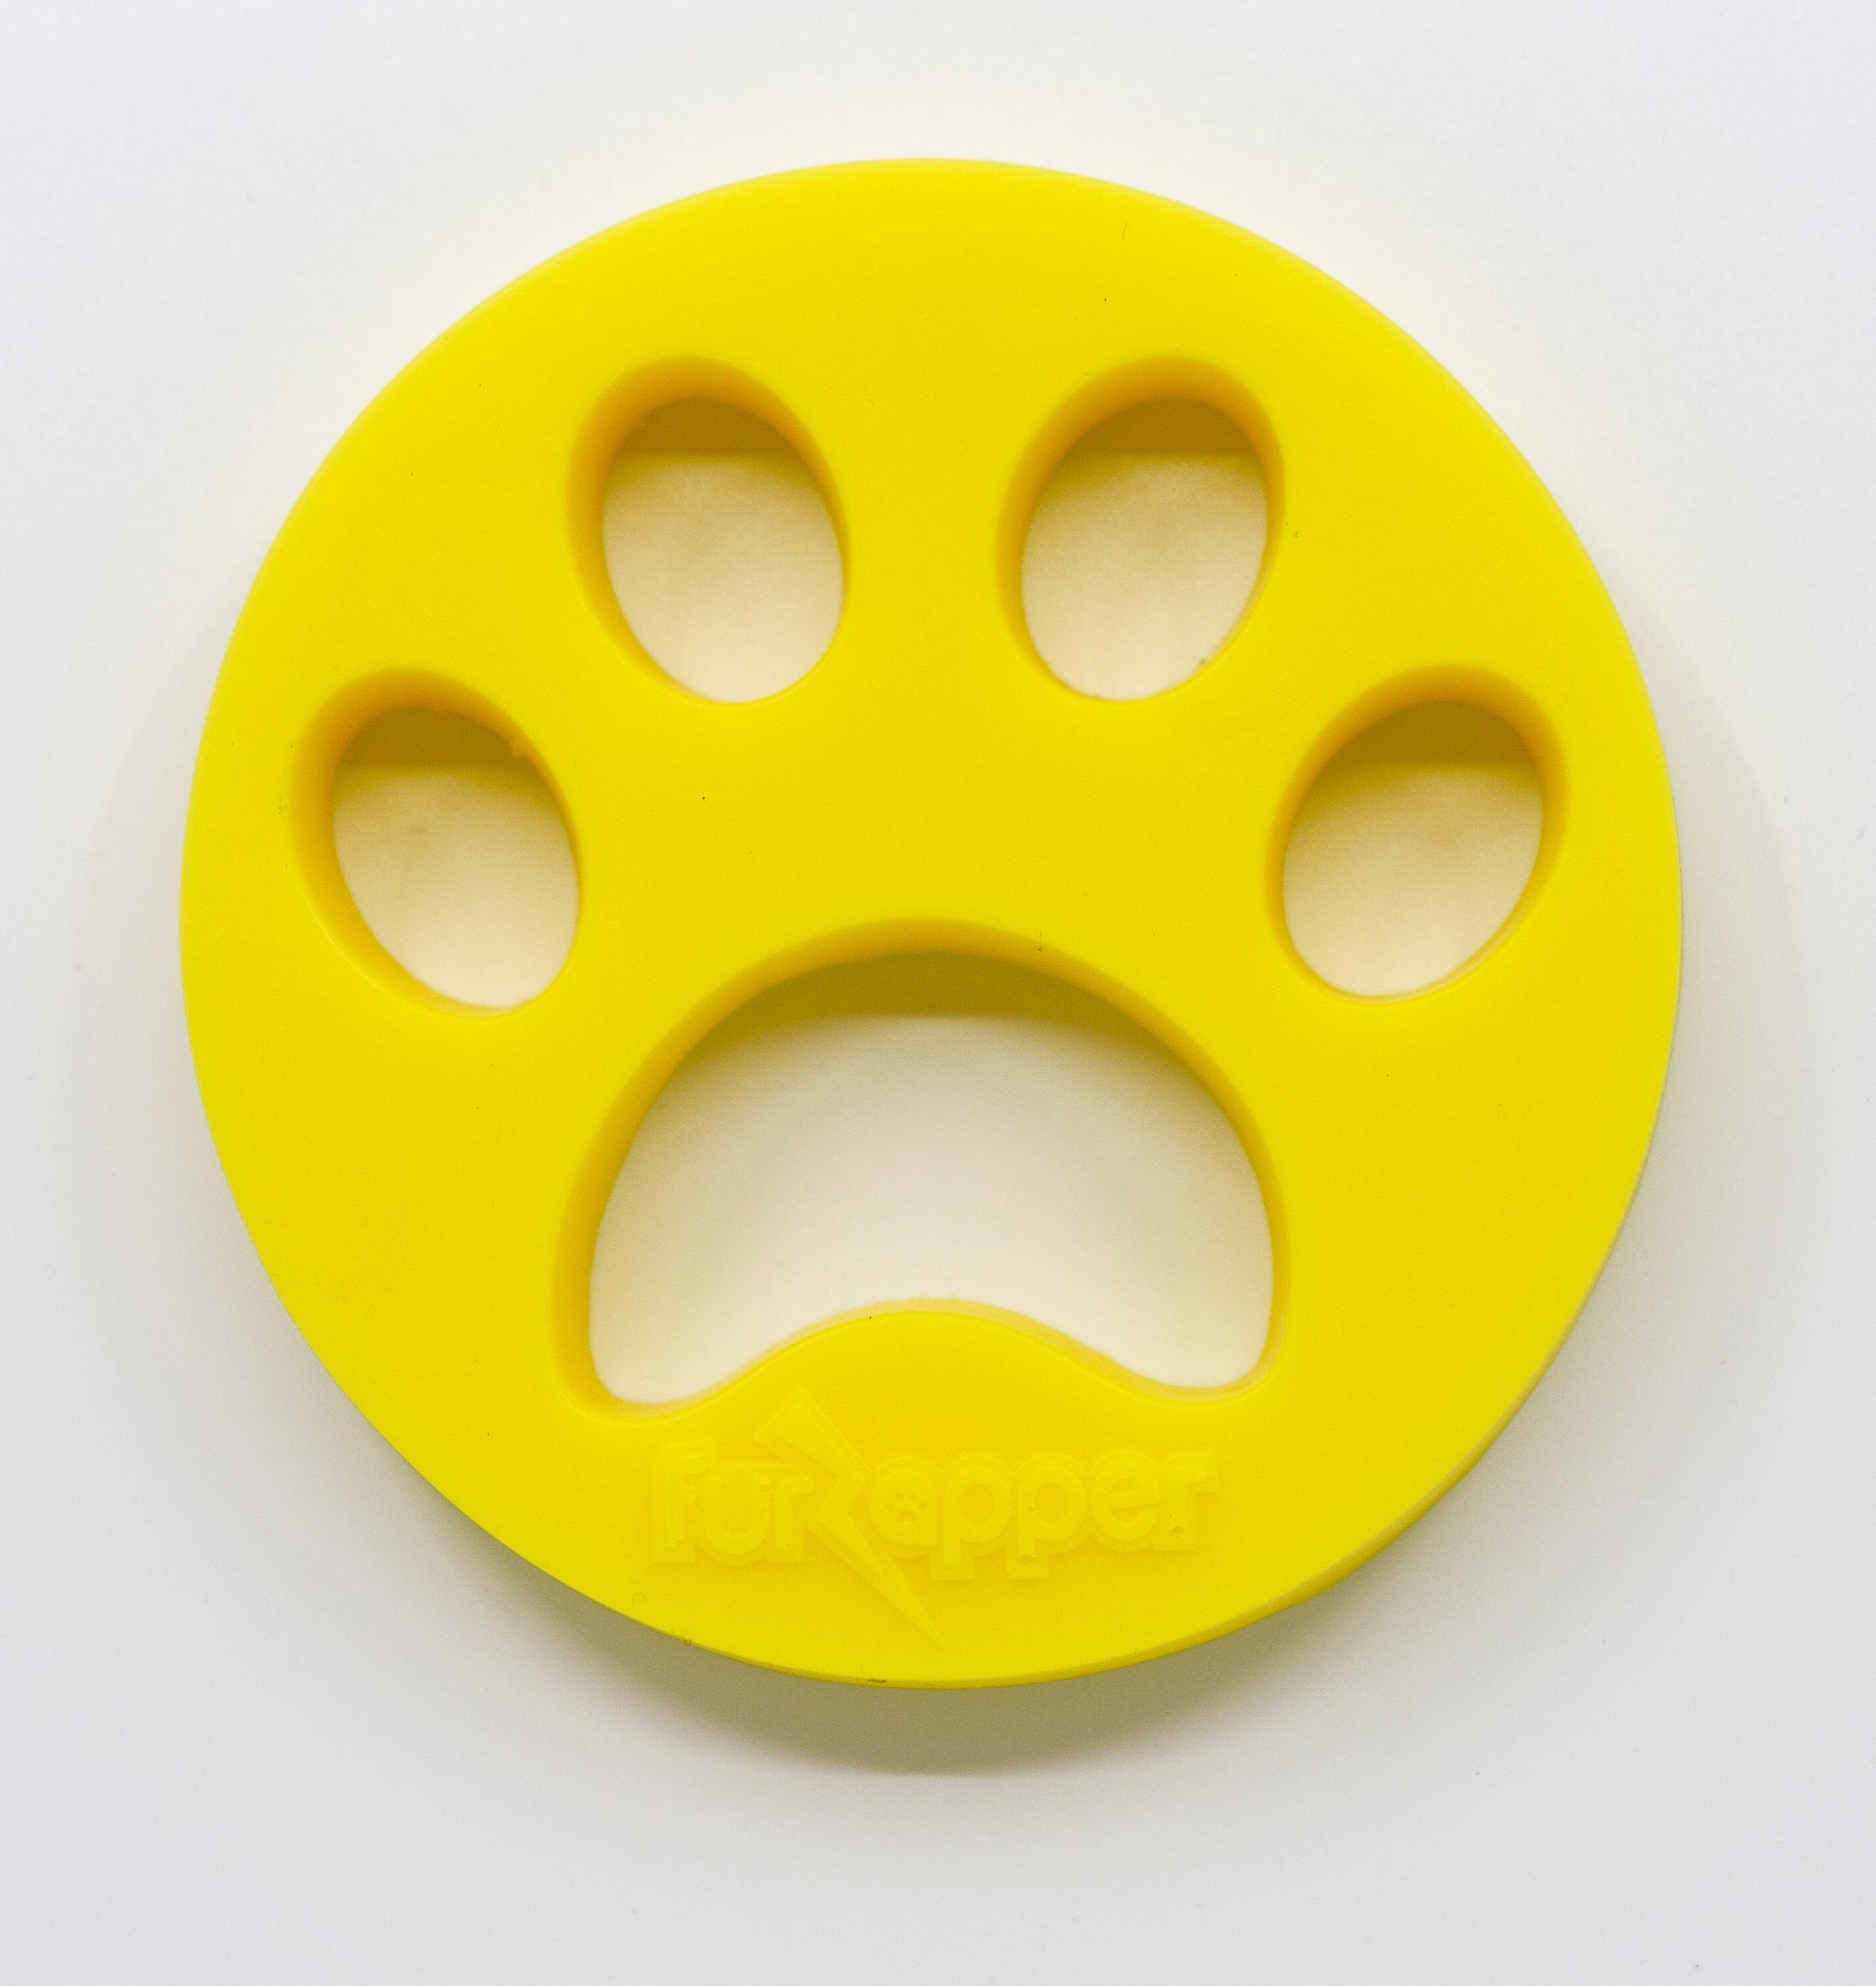 Furzapper Dog And Cat Grooming Tool - Yellow - 2pk : Target